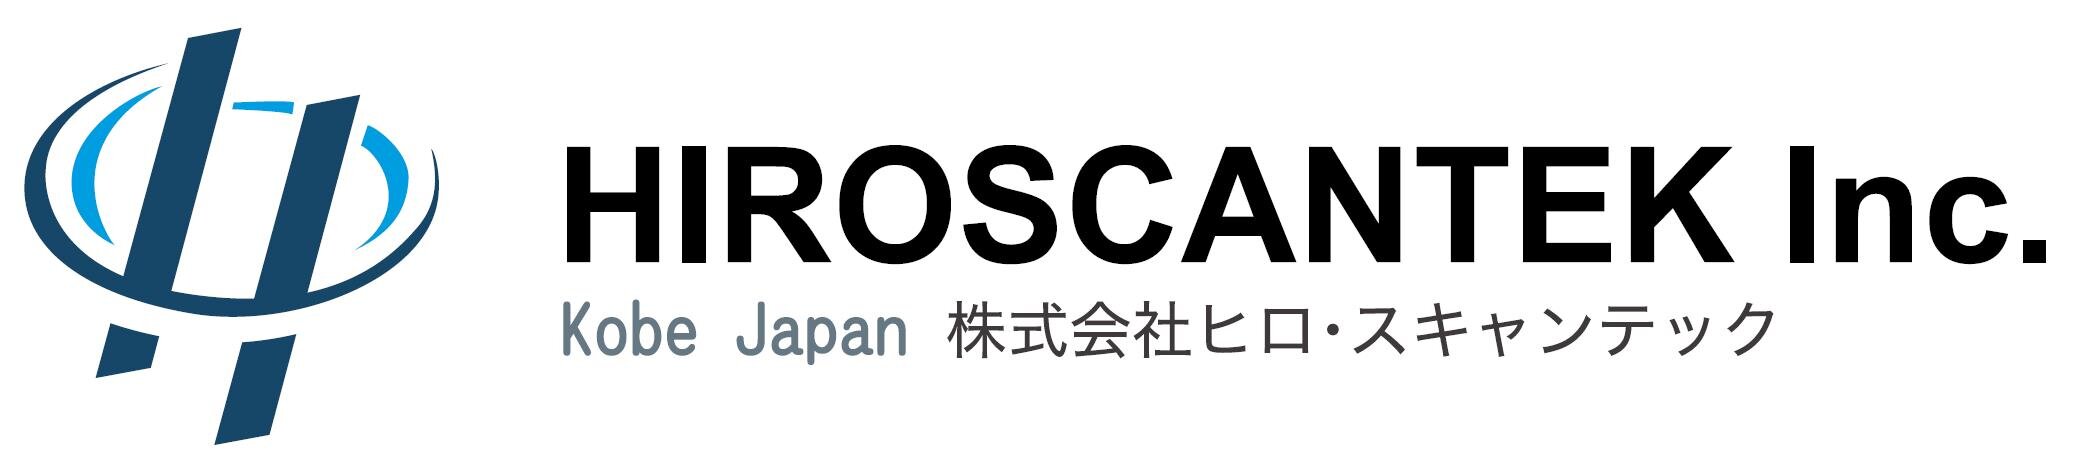 Hiroscantec Inc logo